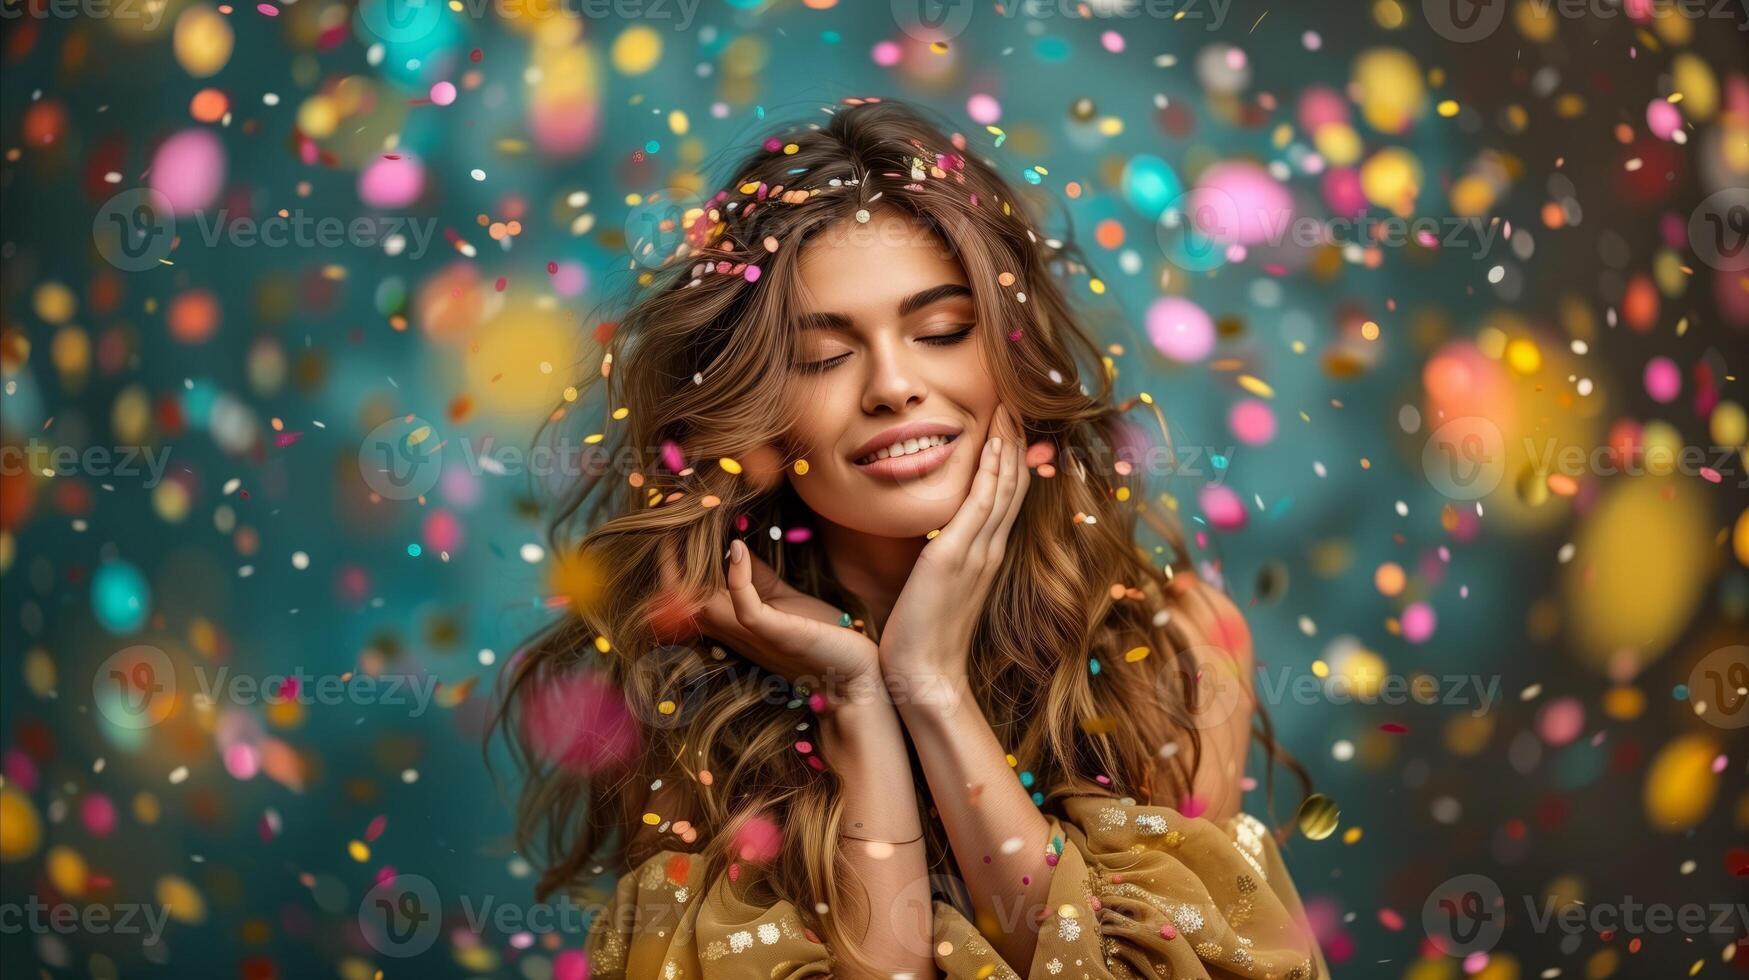 Radiant Woman Celebrating With Confetti on Festive Background photo